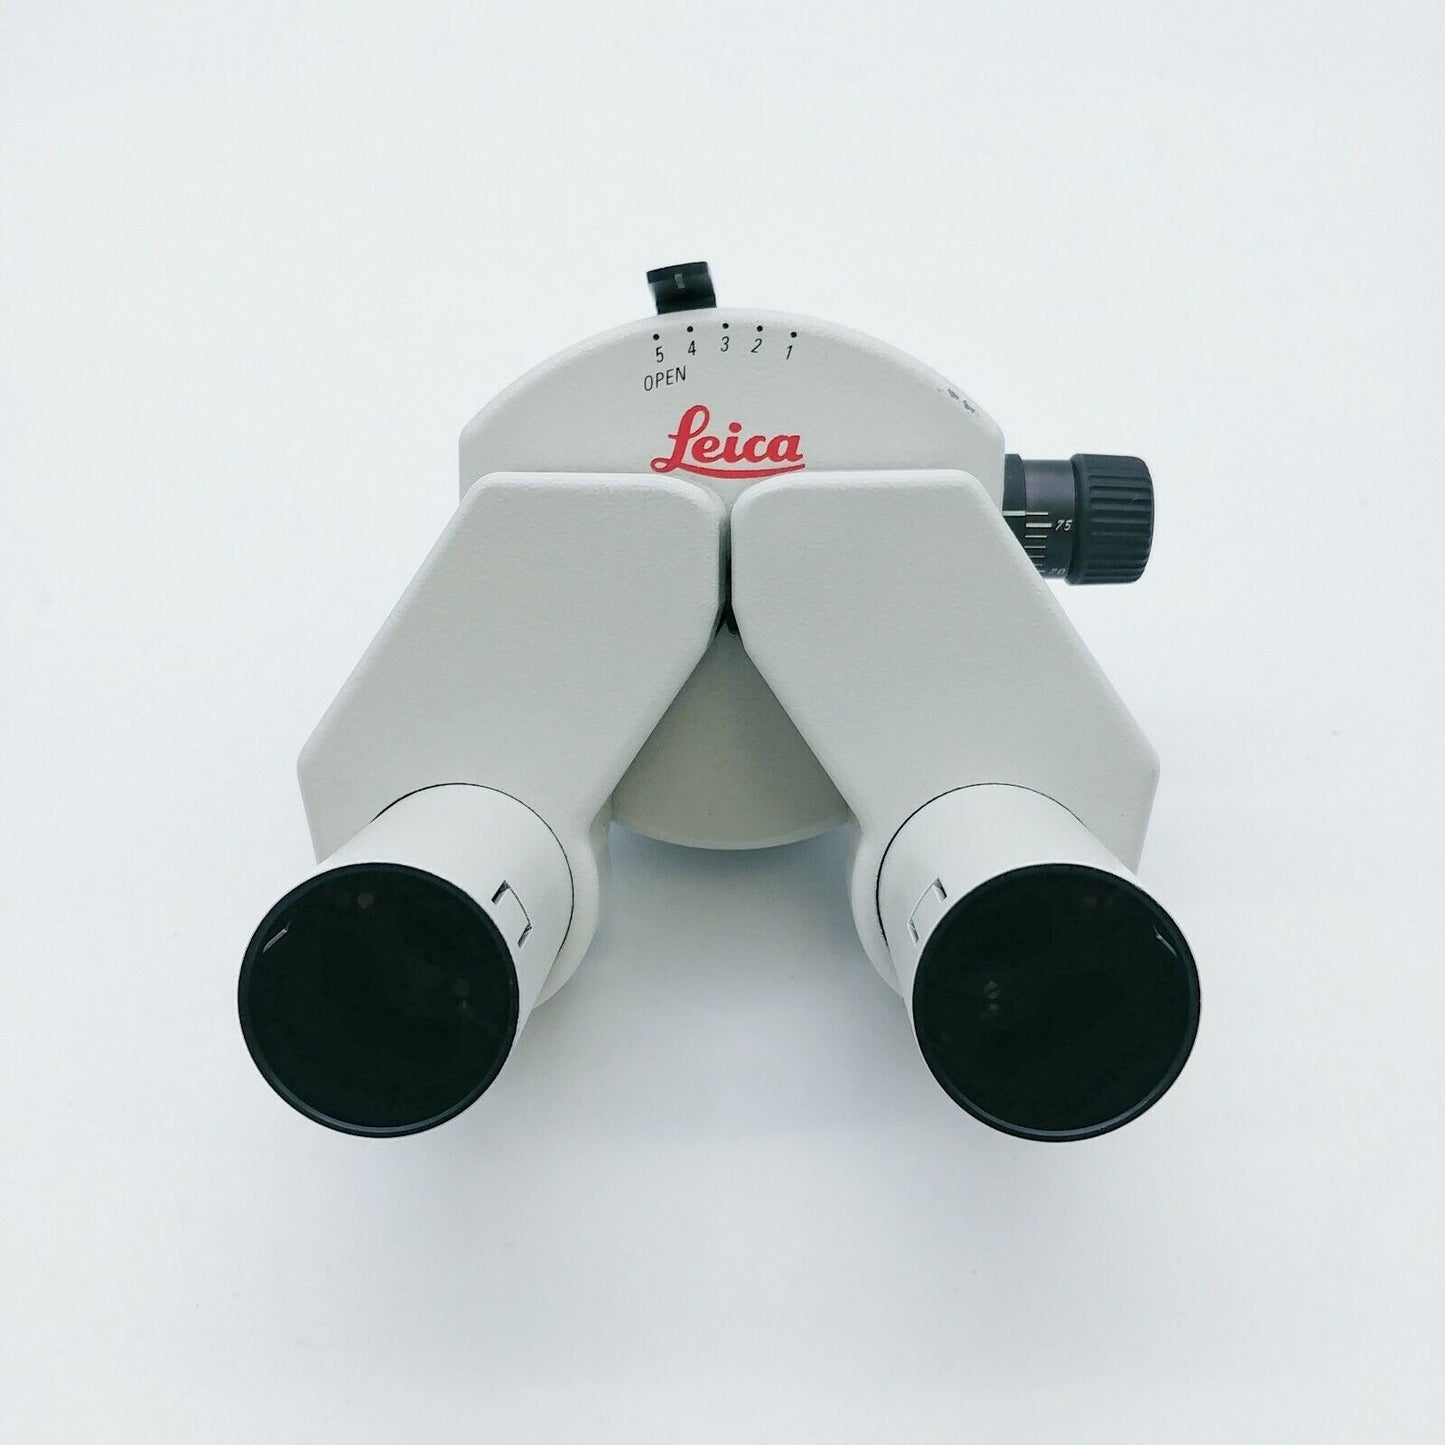 Leica Surgical Microscope Binocular Head 10429784 - microscopemarketplace